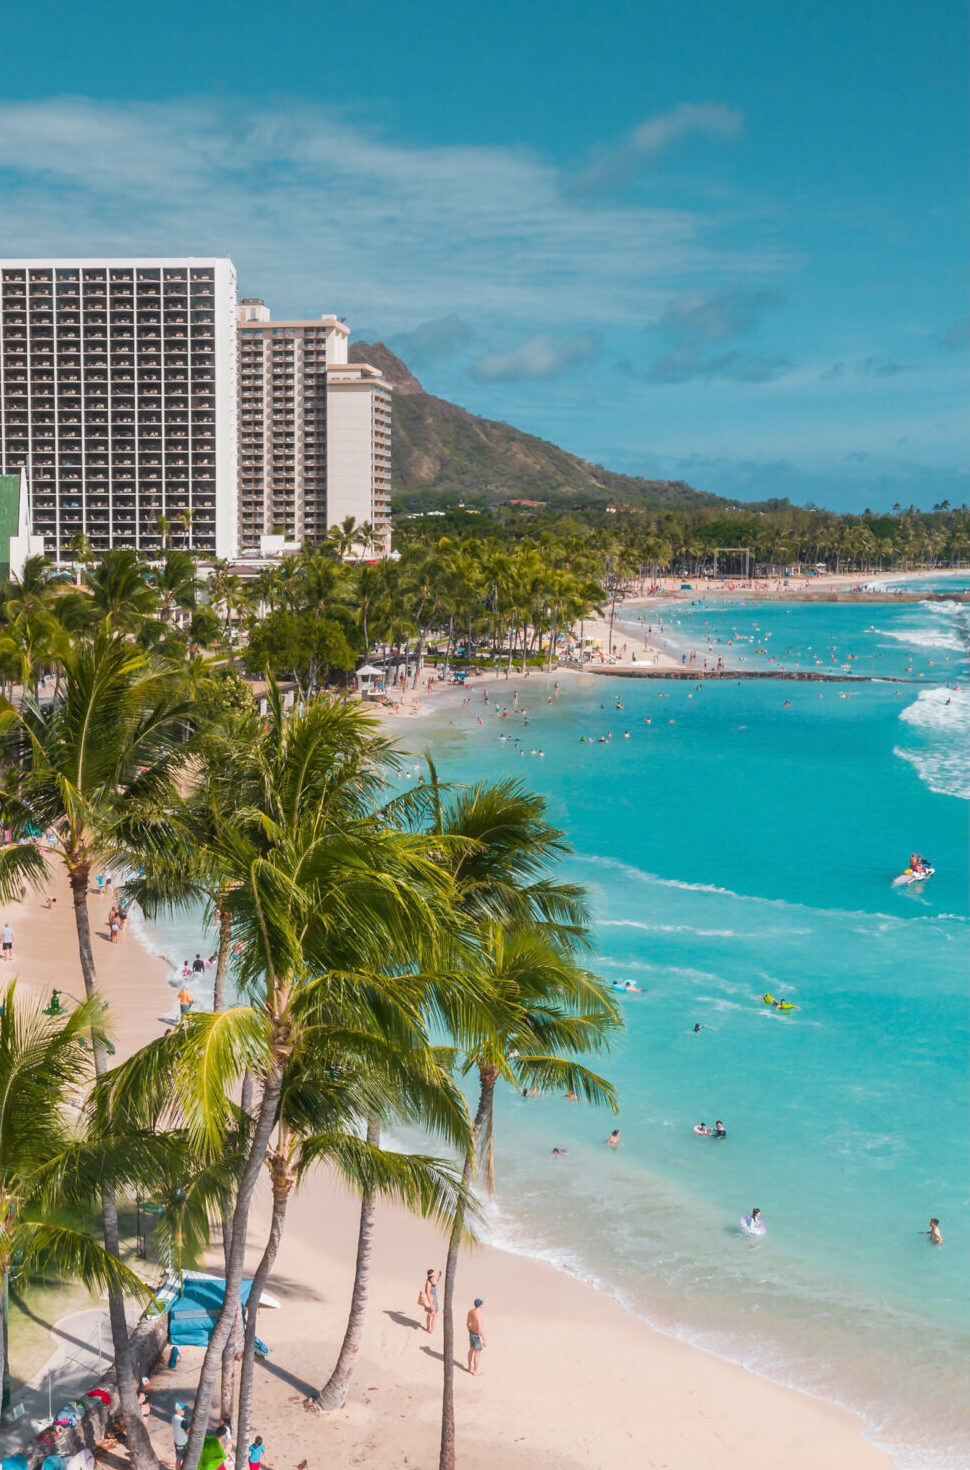 View of Waikiki Beach and Diamond Head with people on sand and swimming in water - Honlulu, Oahu, Hawaii